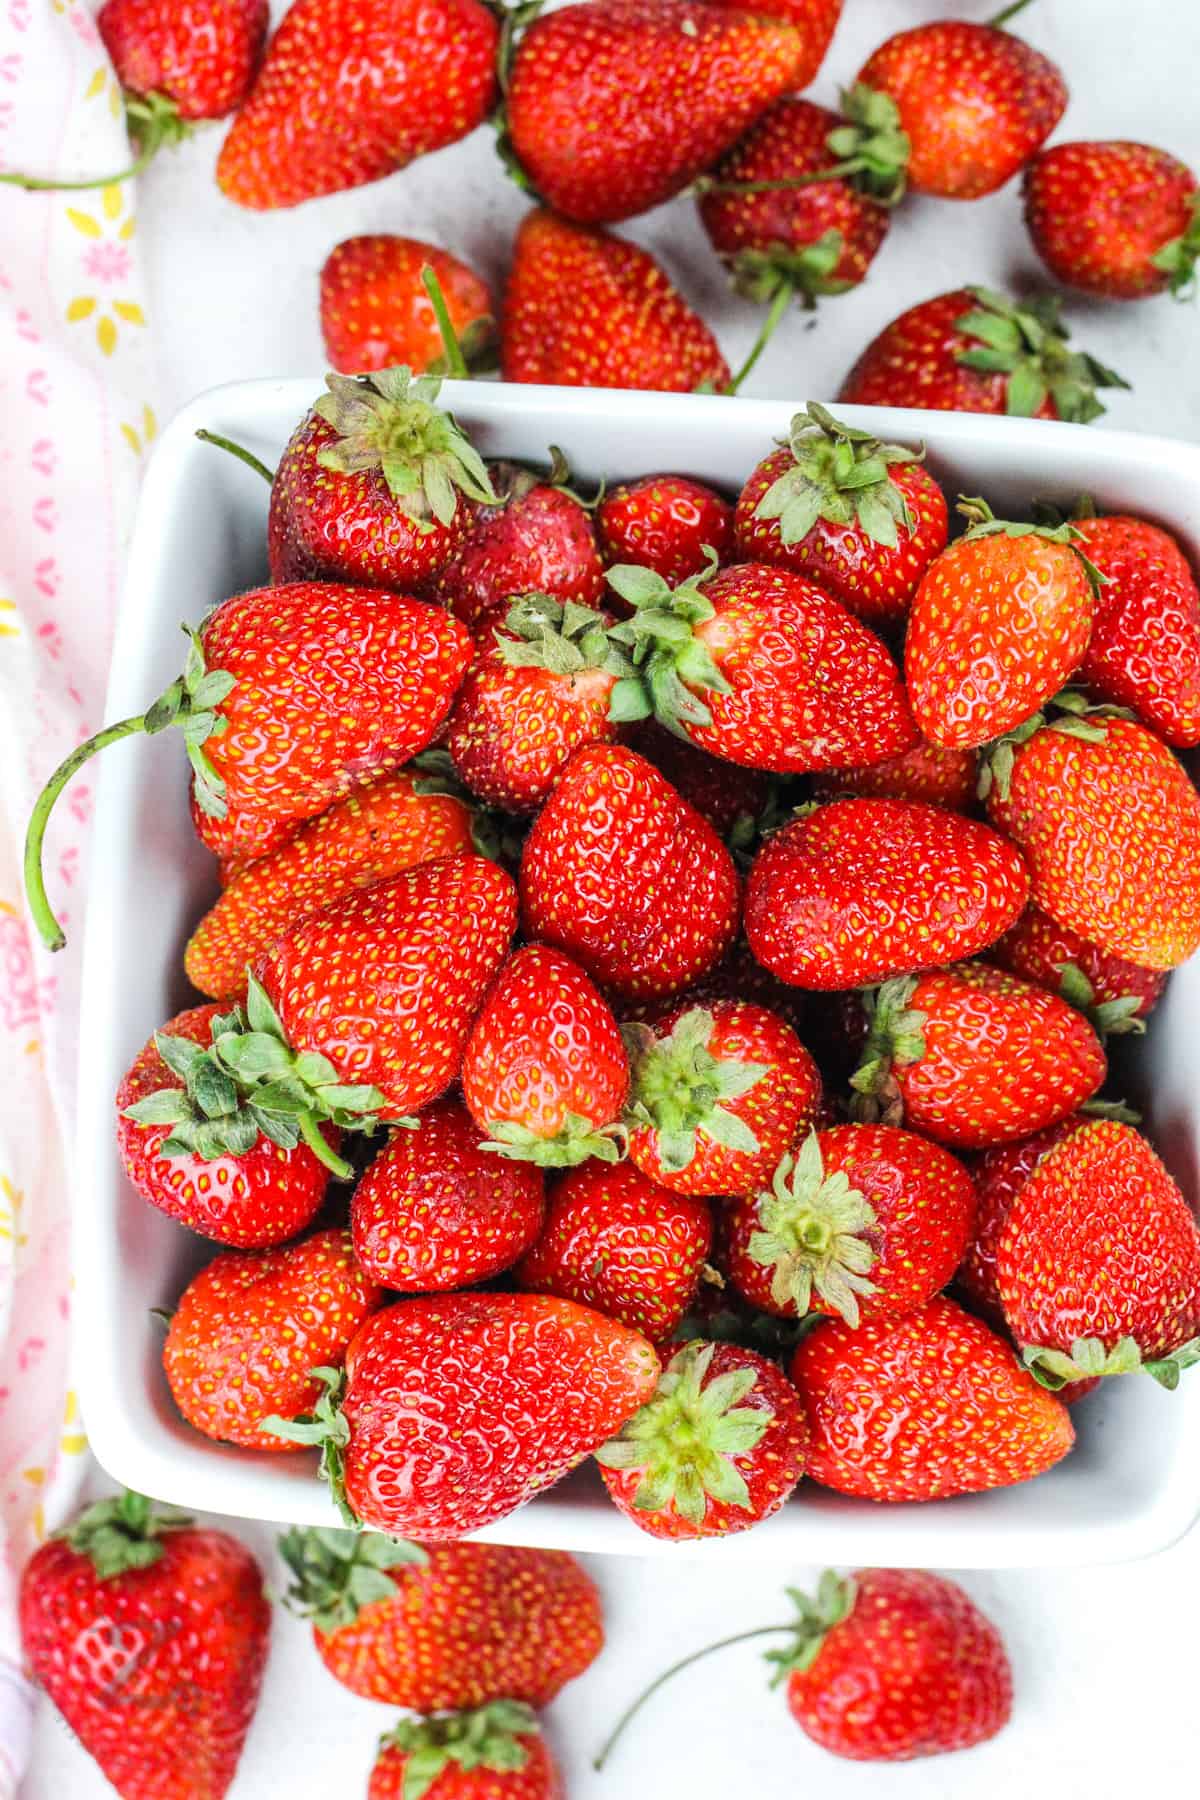 strawberries to make Sugar Free Strawberry Freezer Jam